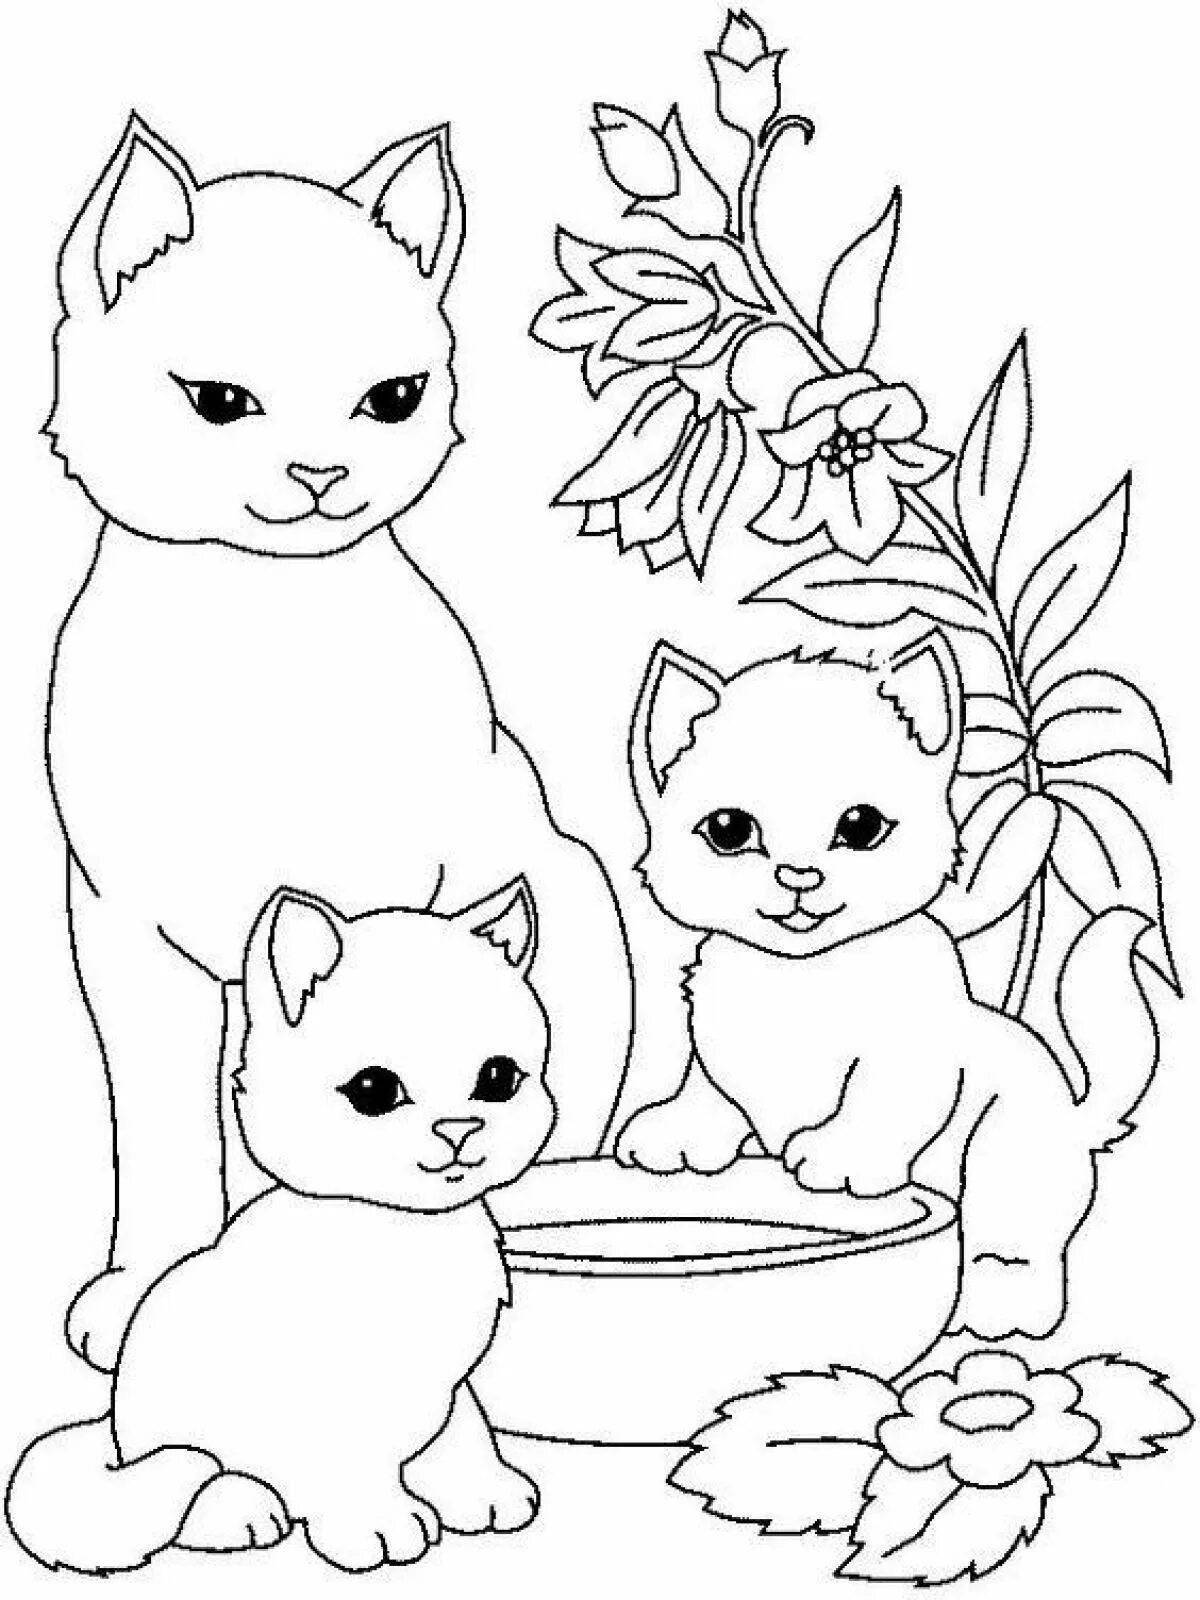 Рисунок любезного кота